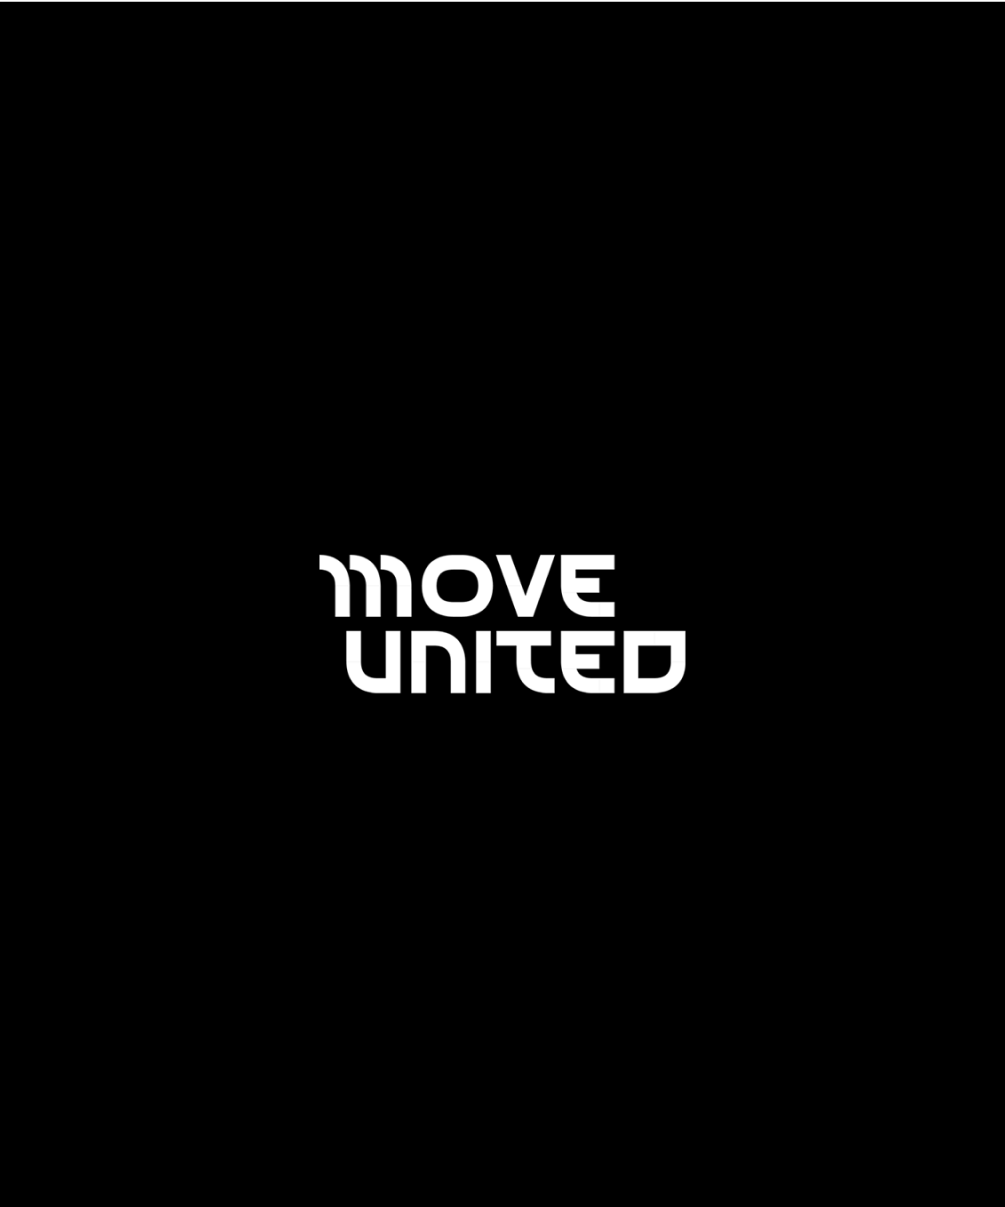 Move united logo